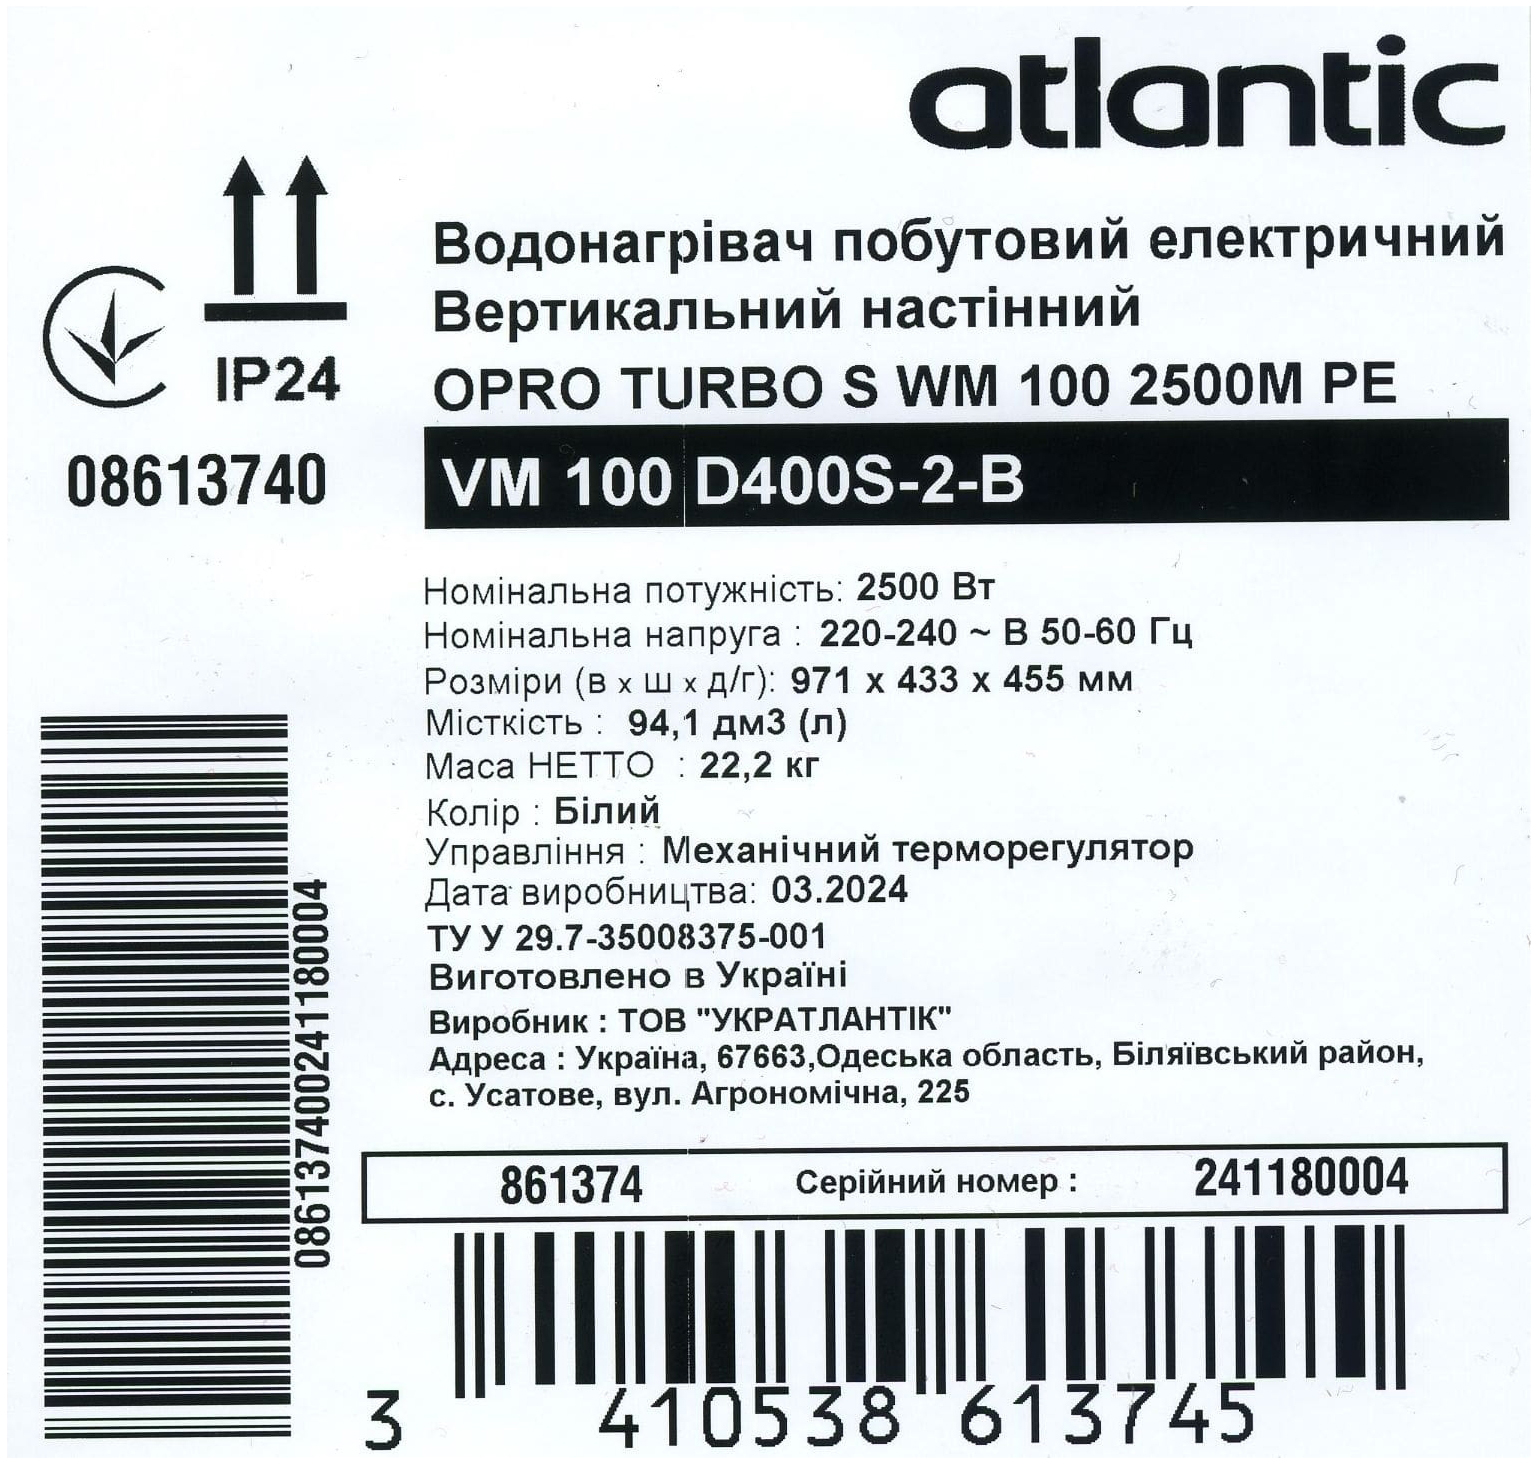 Atlantic Opro Turbo VM 100 D400S-2-B (2500W) в магазине в Киеве - фото 10